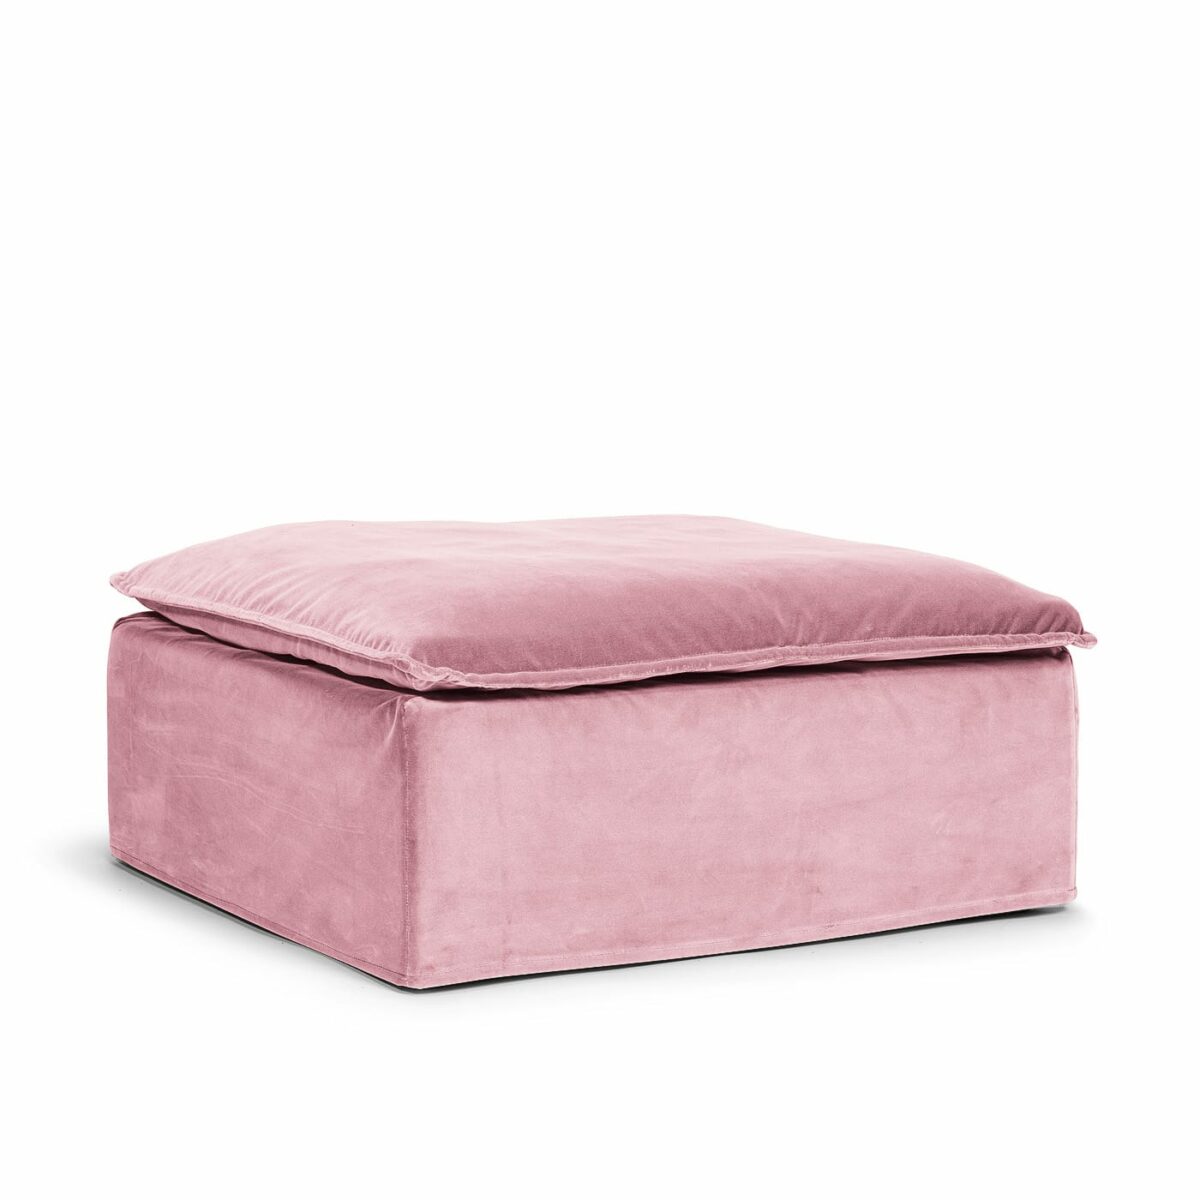 Luca Grande 2-Seat Sofa Dusty Pink